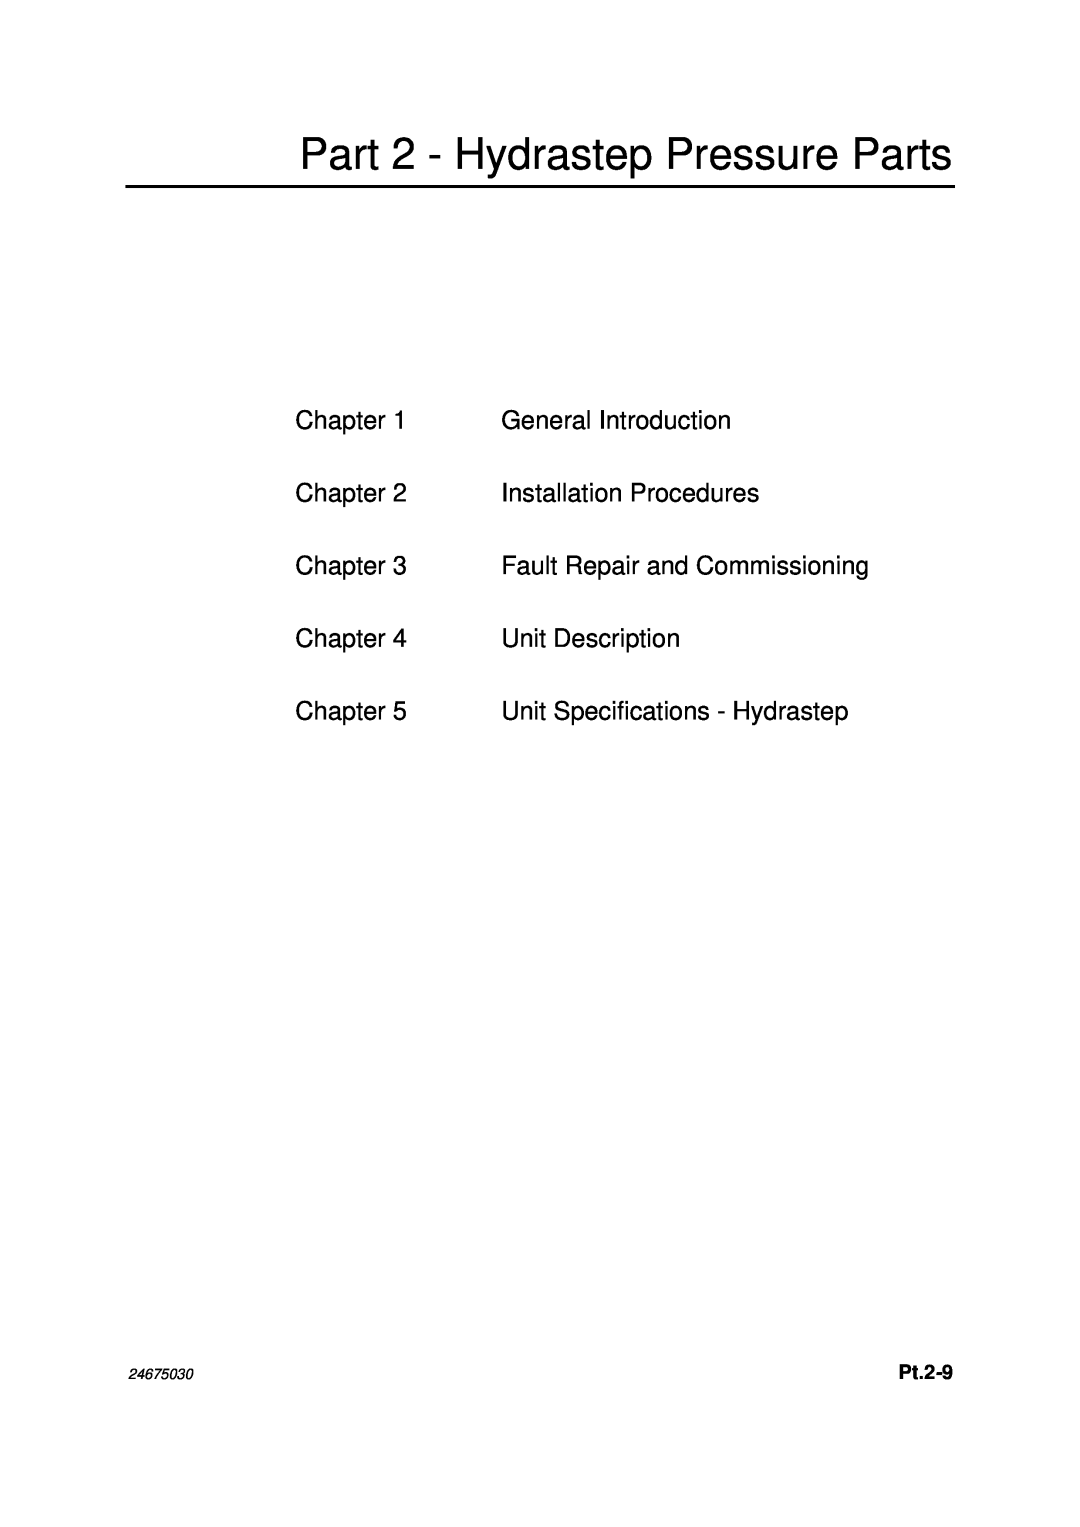 Emerson 2468CD Part 2 - Hydrastep Pressure Parts, Chapter, General Introduction, Installation Procedures, Unit Description 